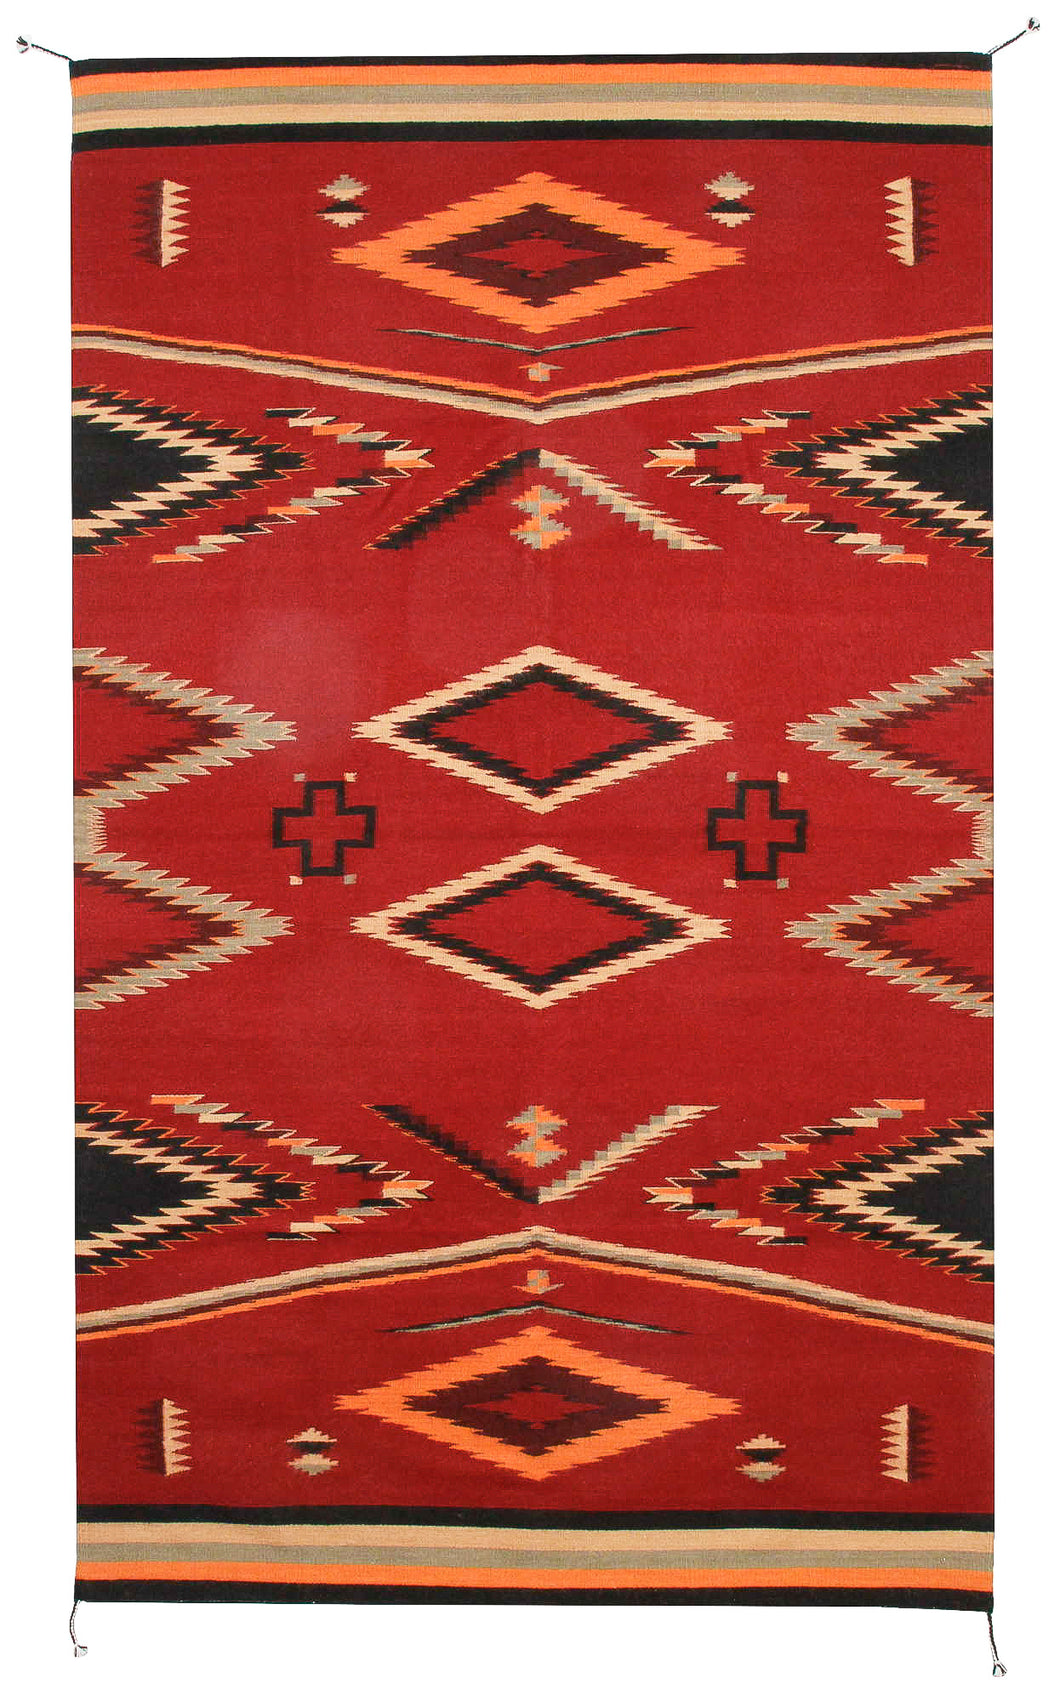 Handwoven Zapotec Indian Rug - Walk in Beauty Wool Oaxacan Textile